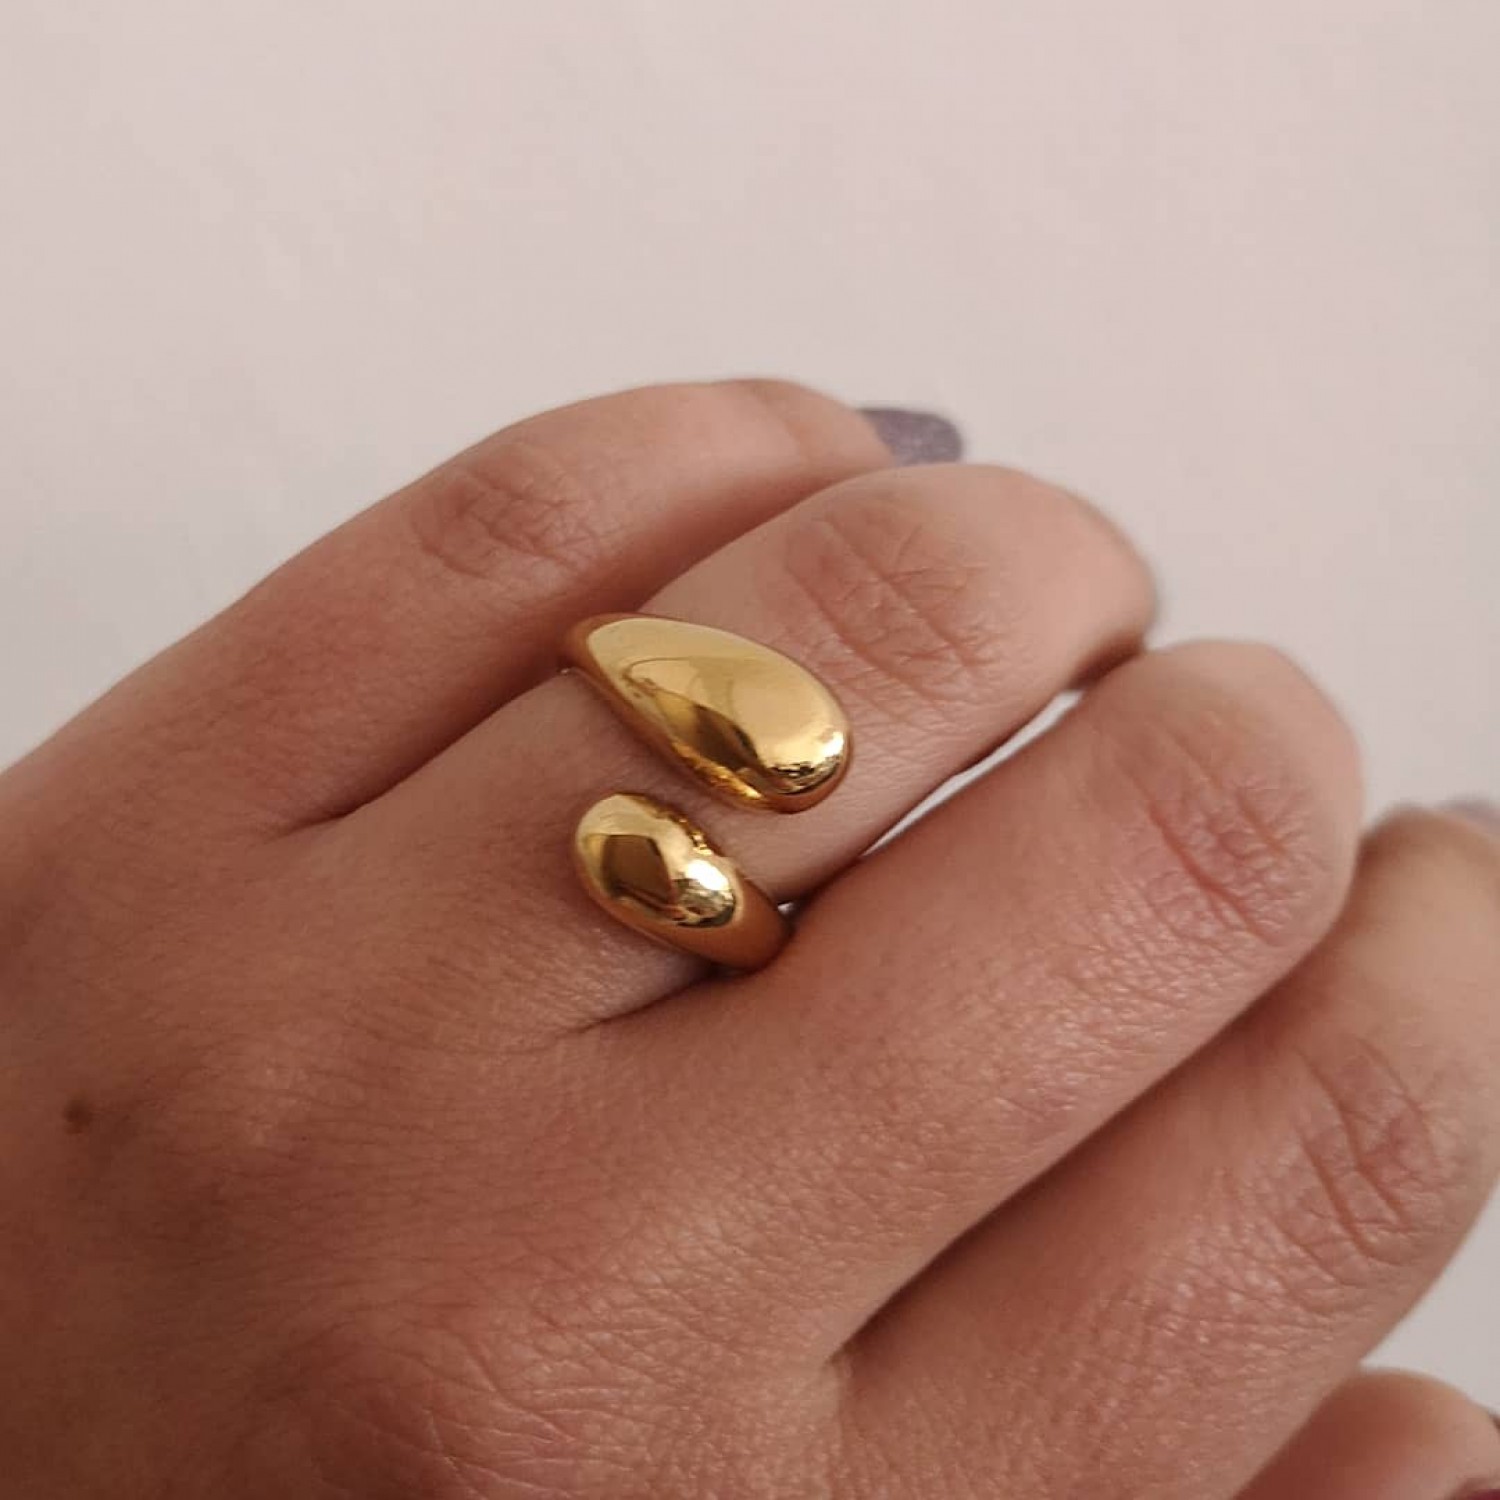 STAINLESS STEEL δαχτυλίδι ατσάλι κίτρινο χρυσό.